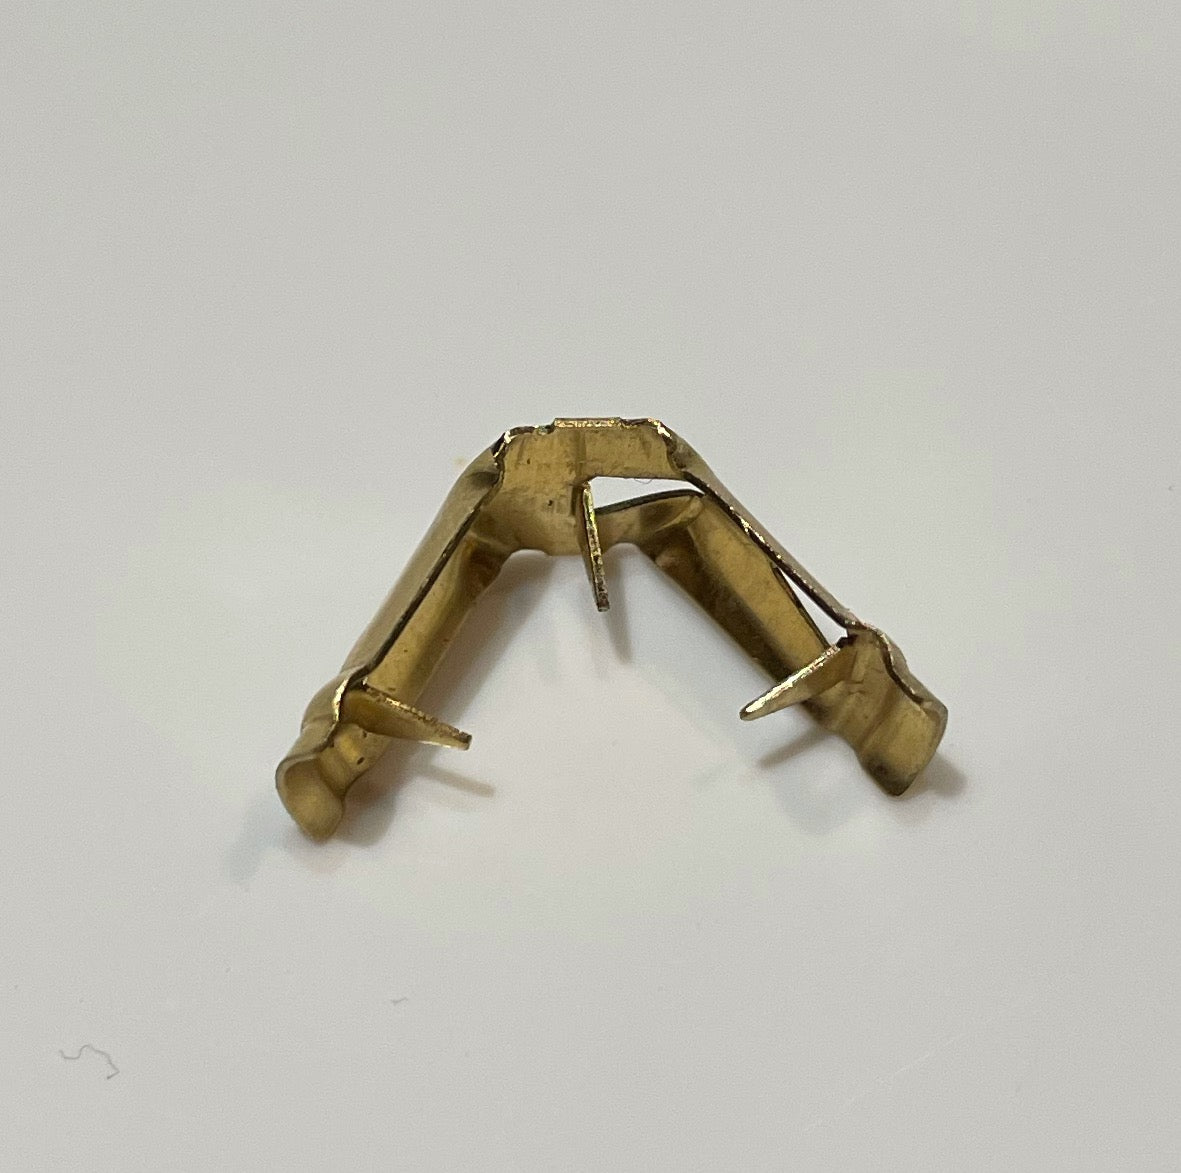 7mm Distributor end terminal - Brass